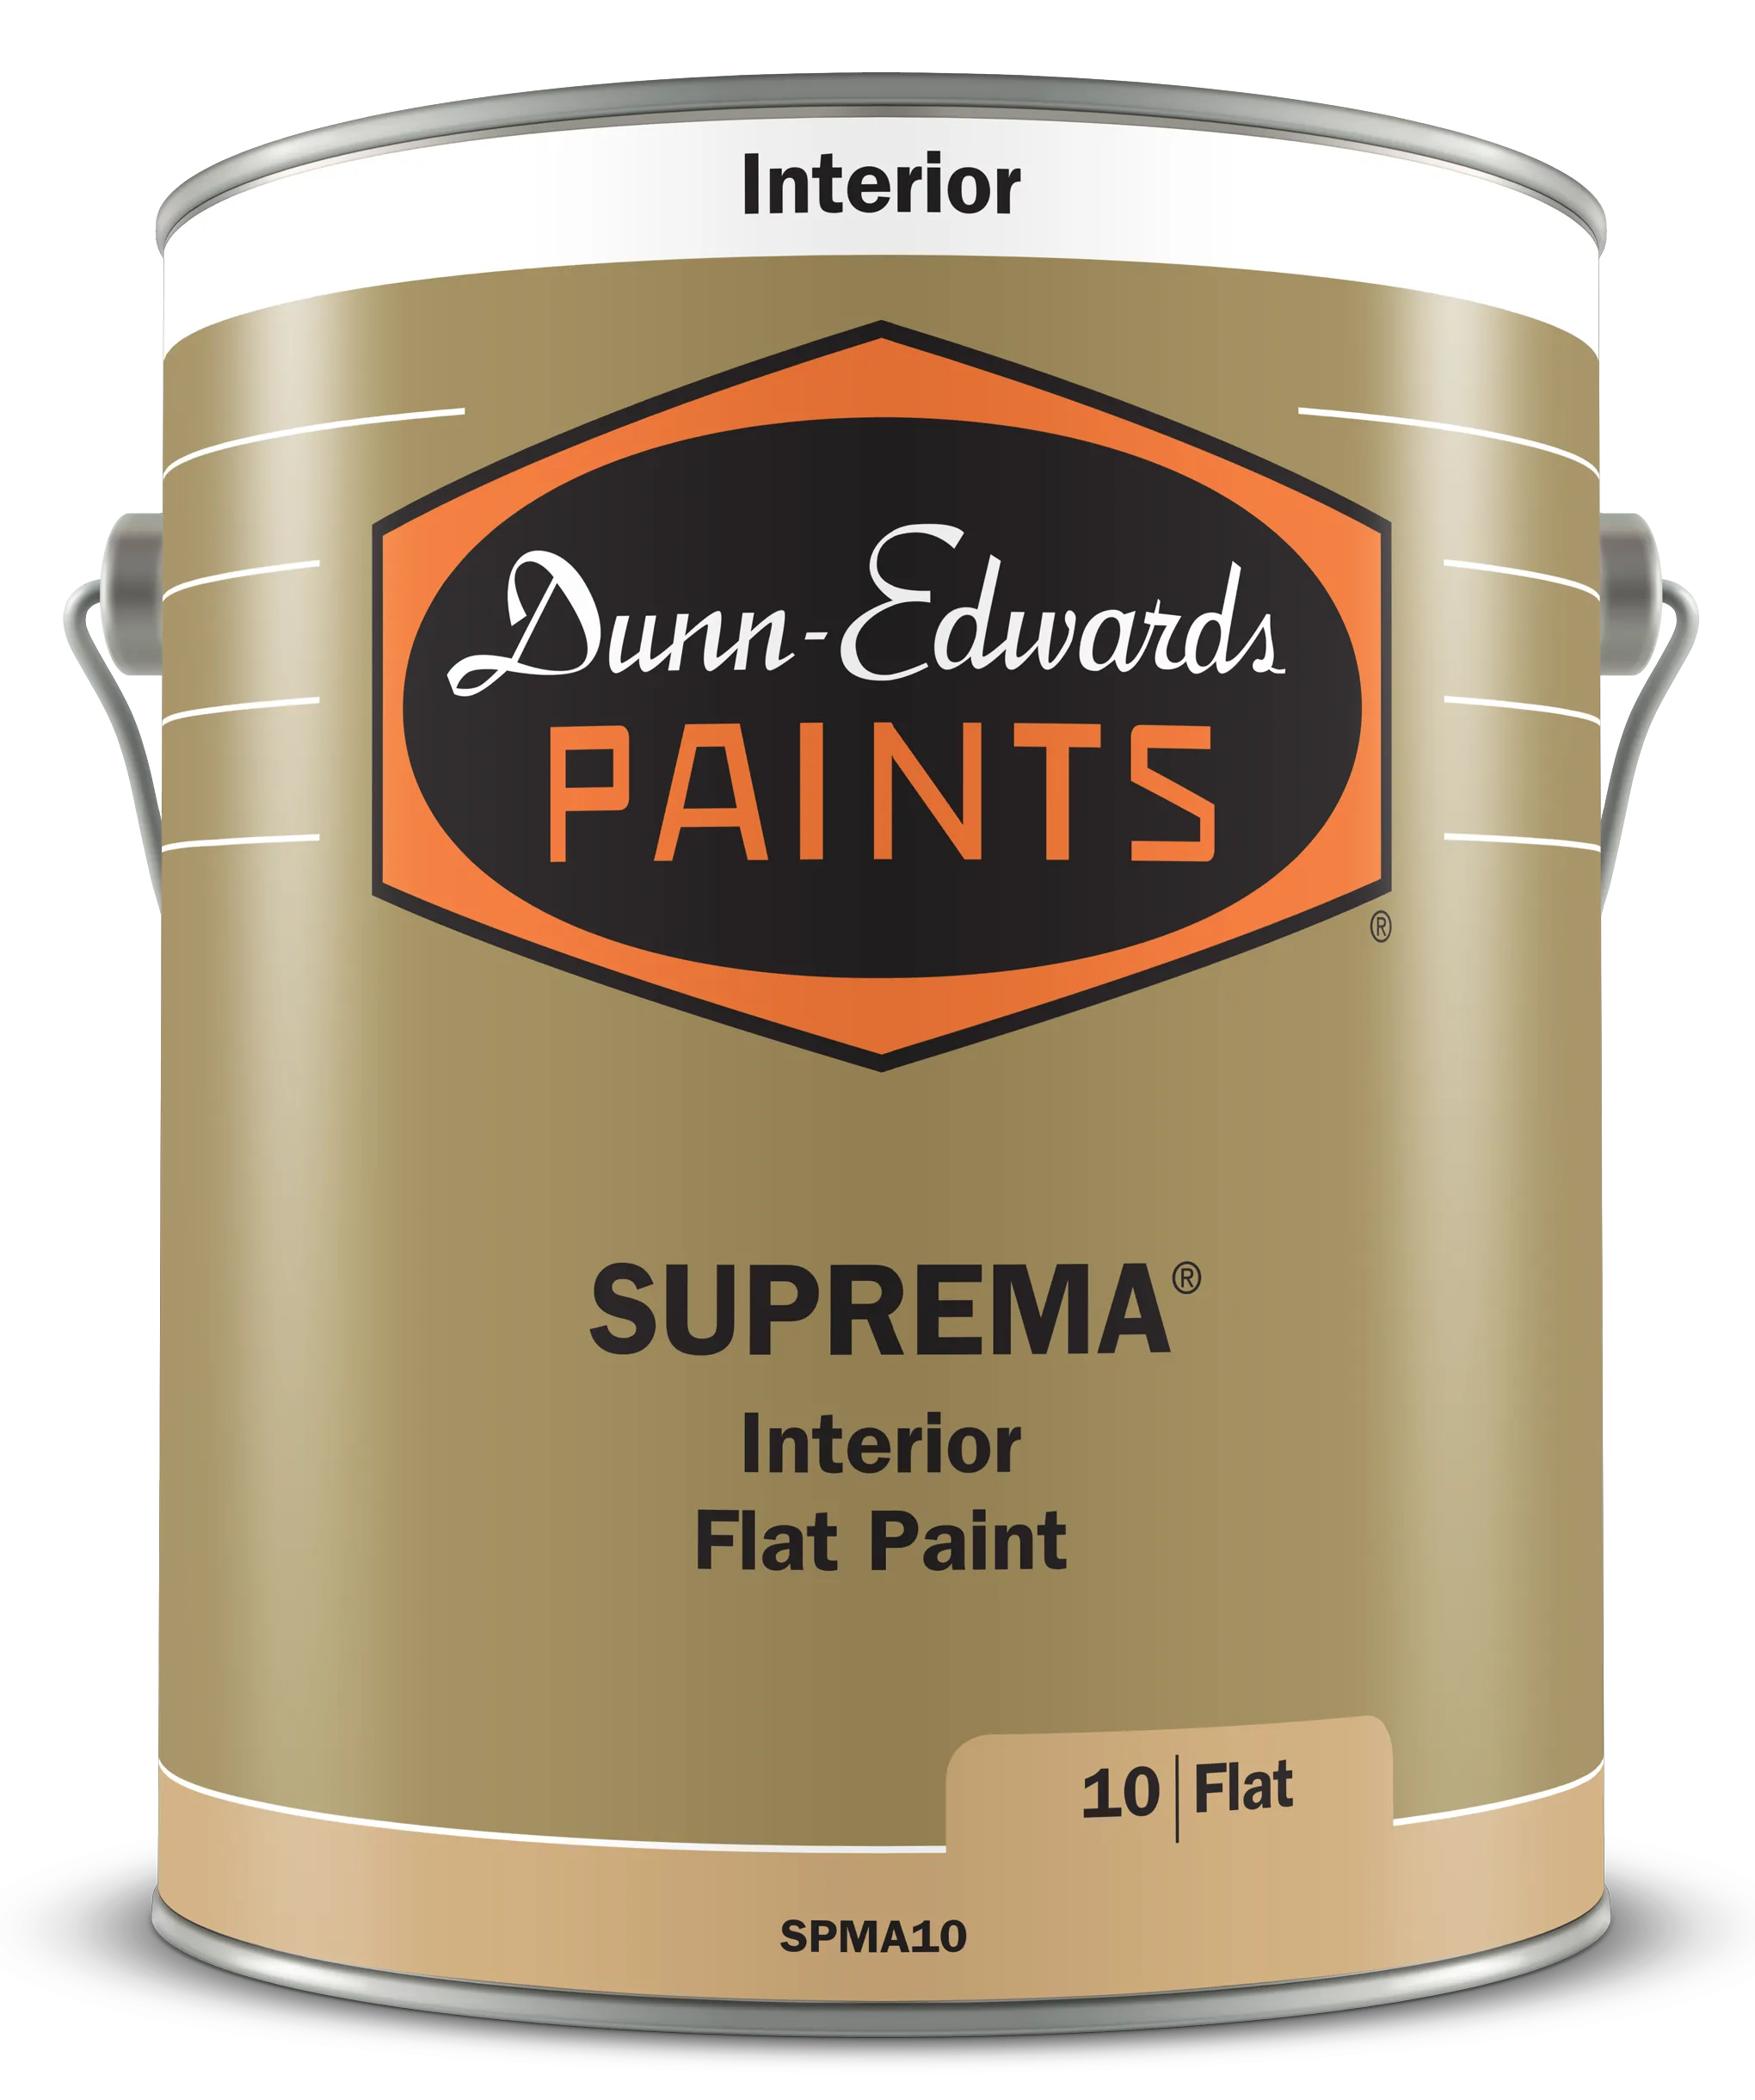 SUPREMA Interior Flat Paint Can